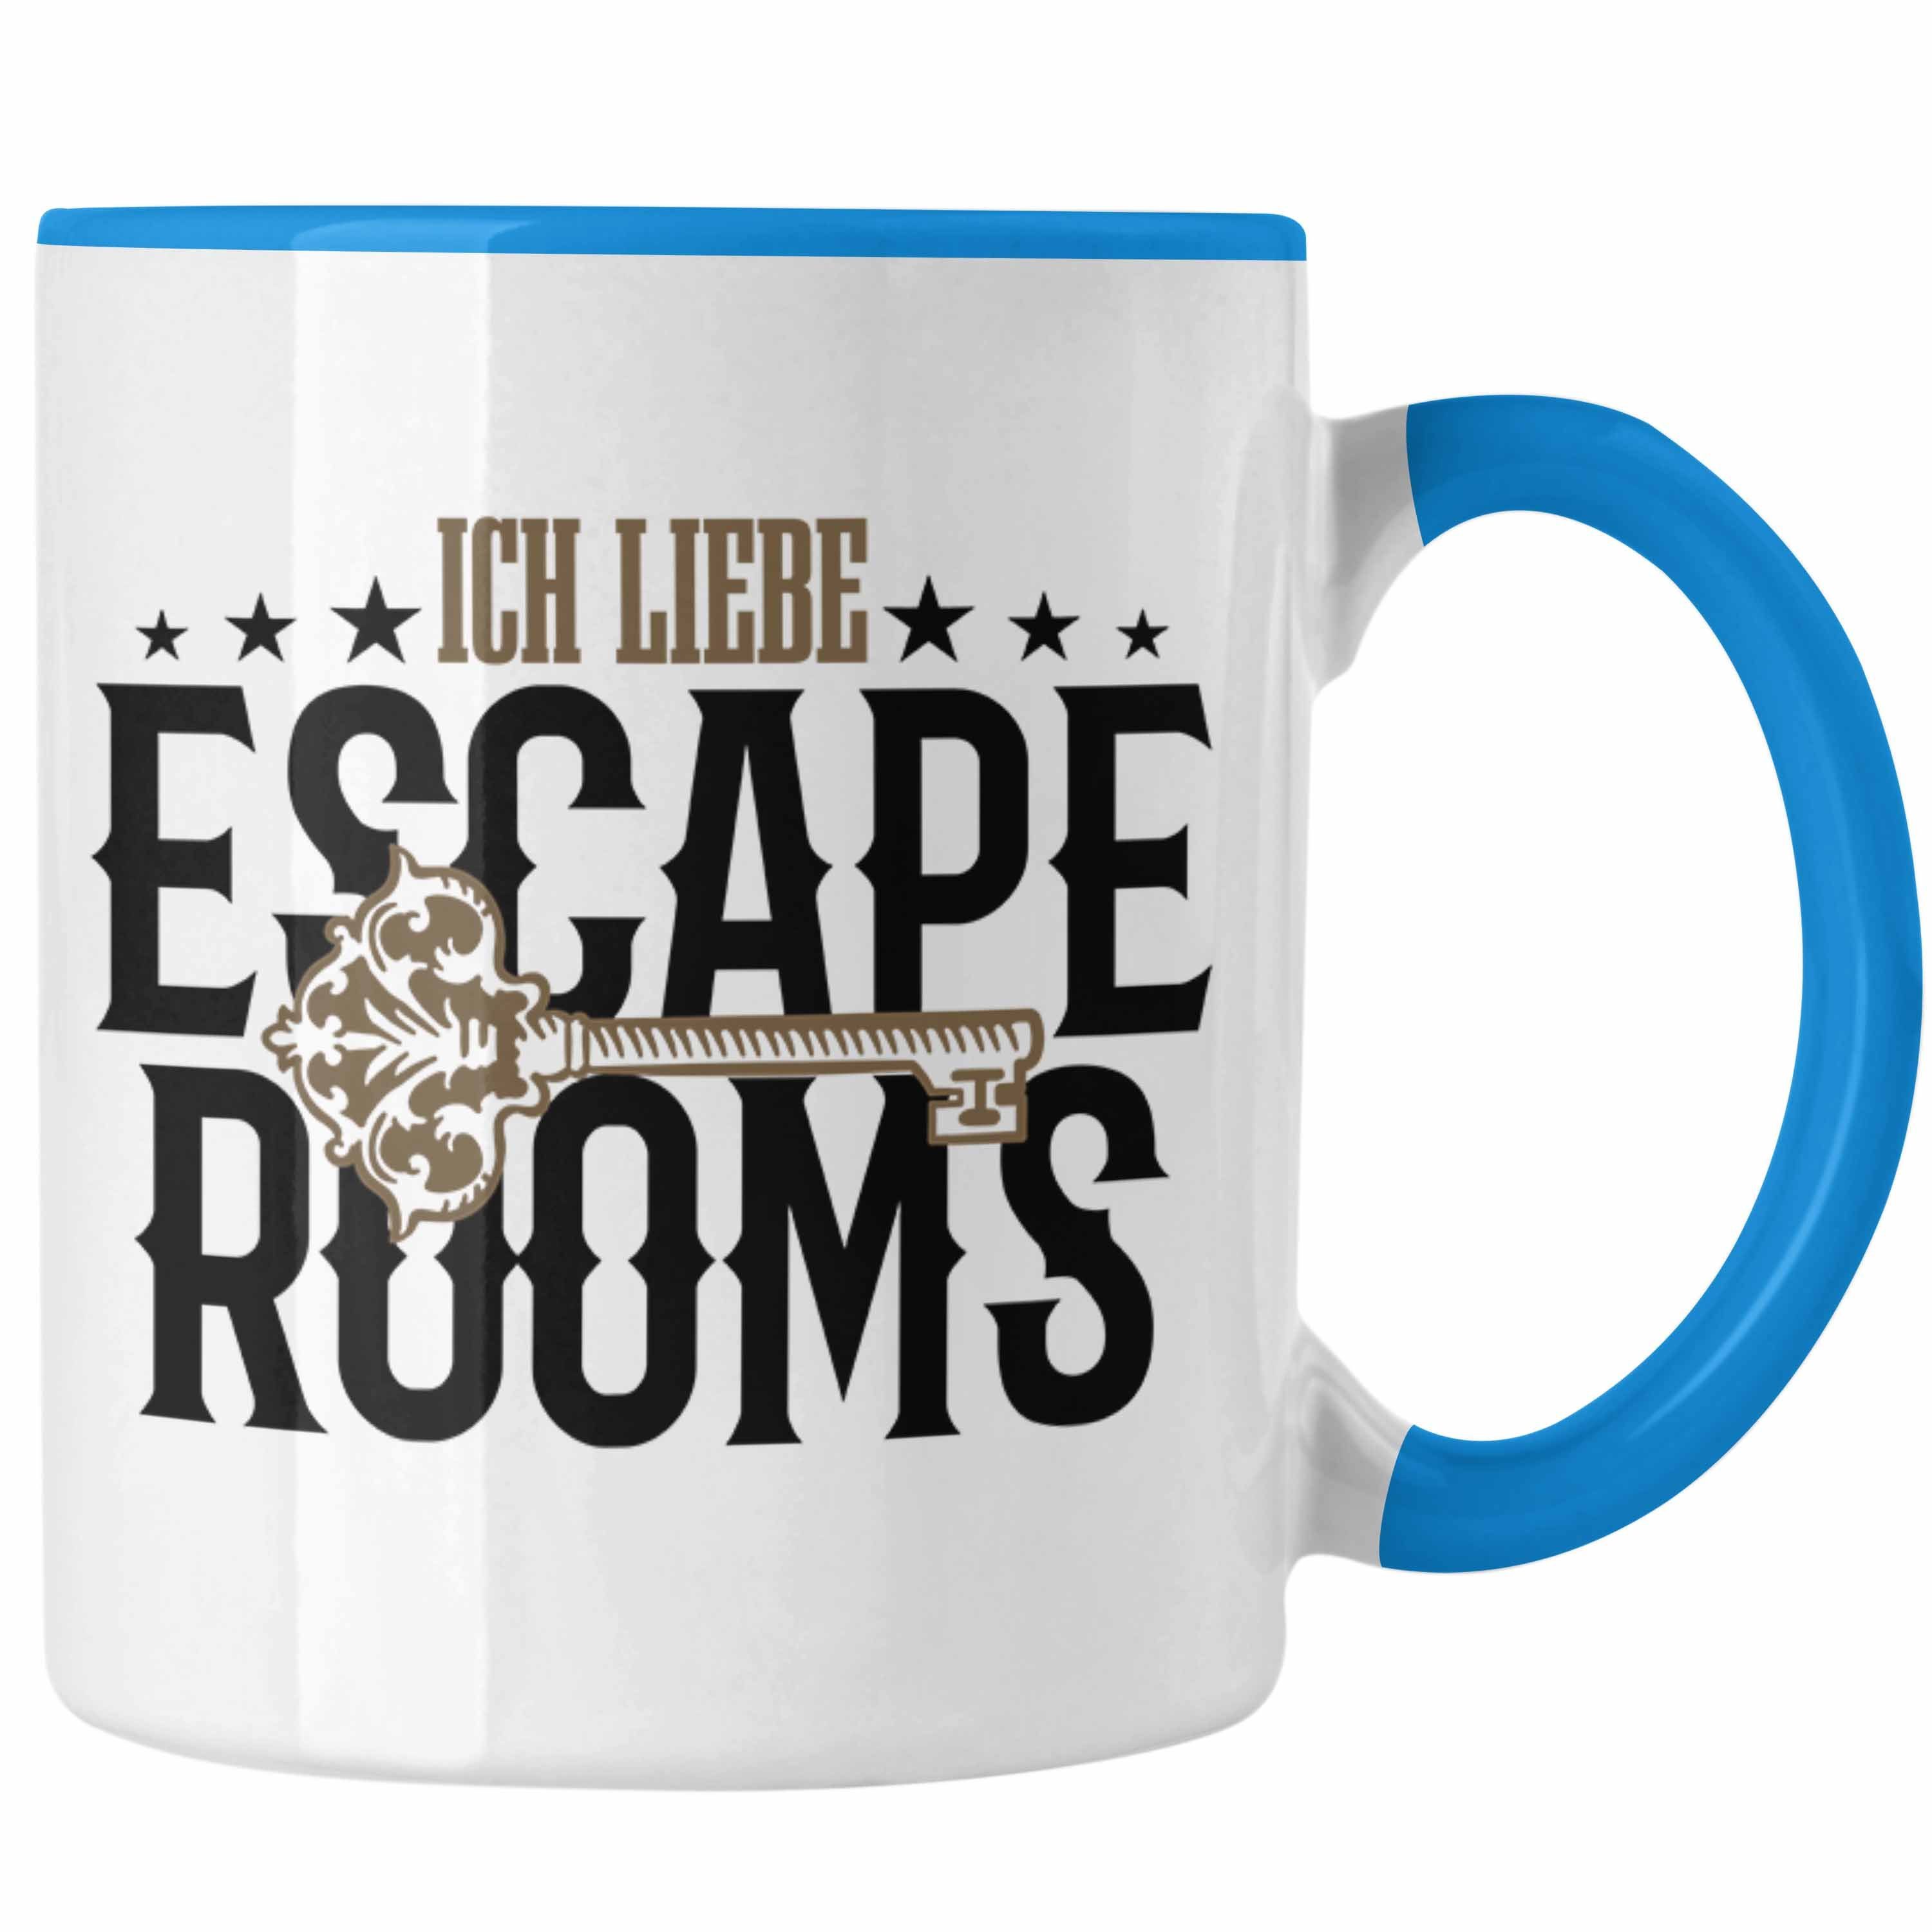 Trendation Tasse Escape Room Lustige Tasse Escape Room Fans Geschenkidee Blau